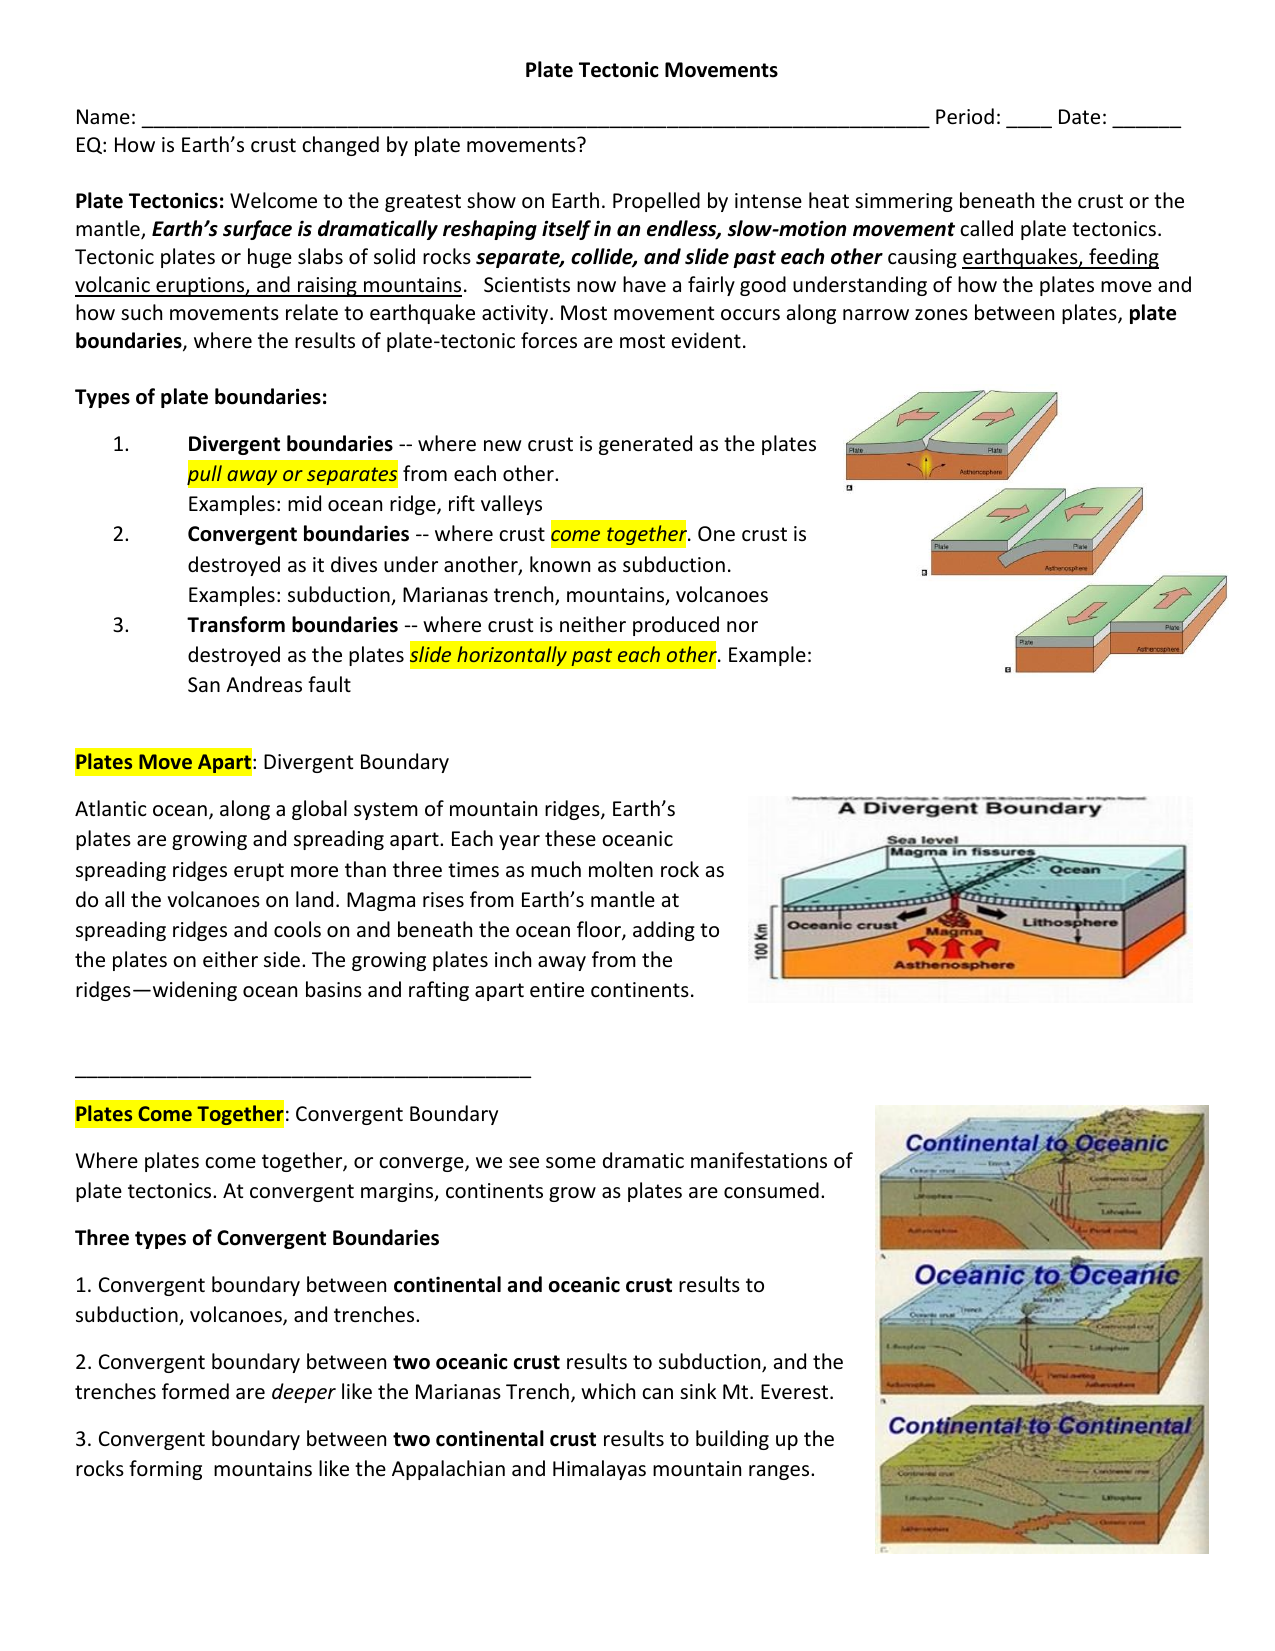 plate tectonics essay conclusion